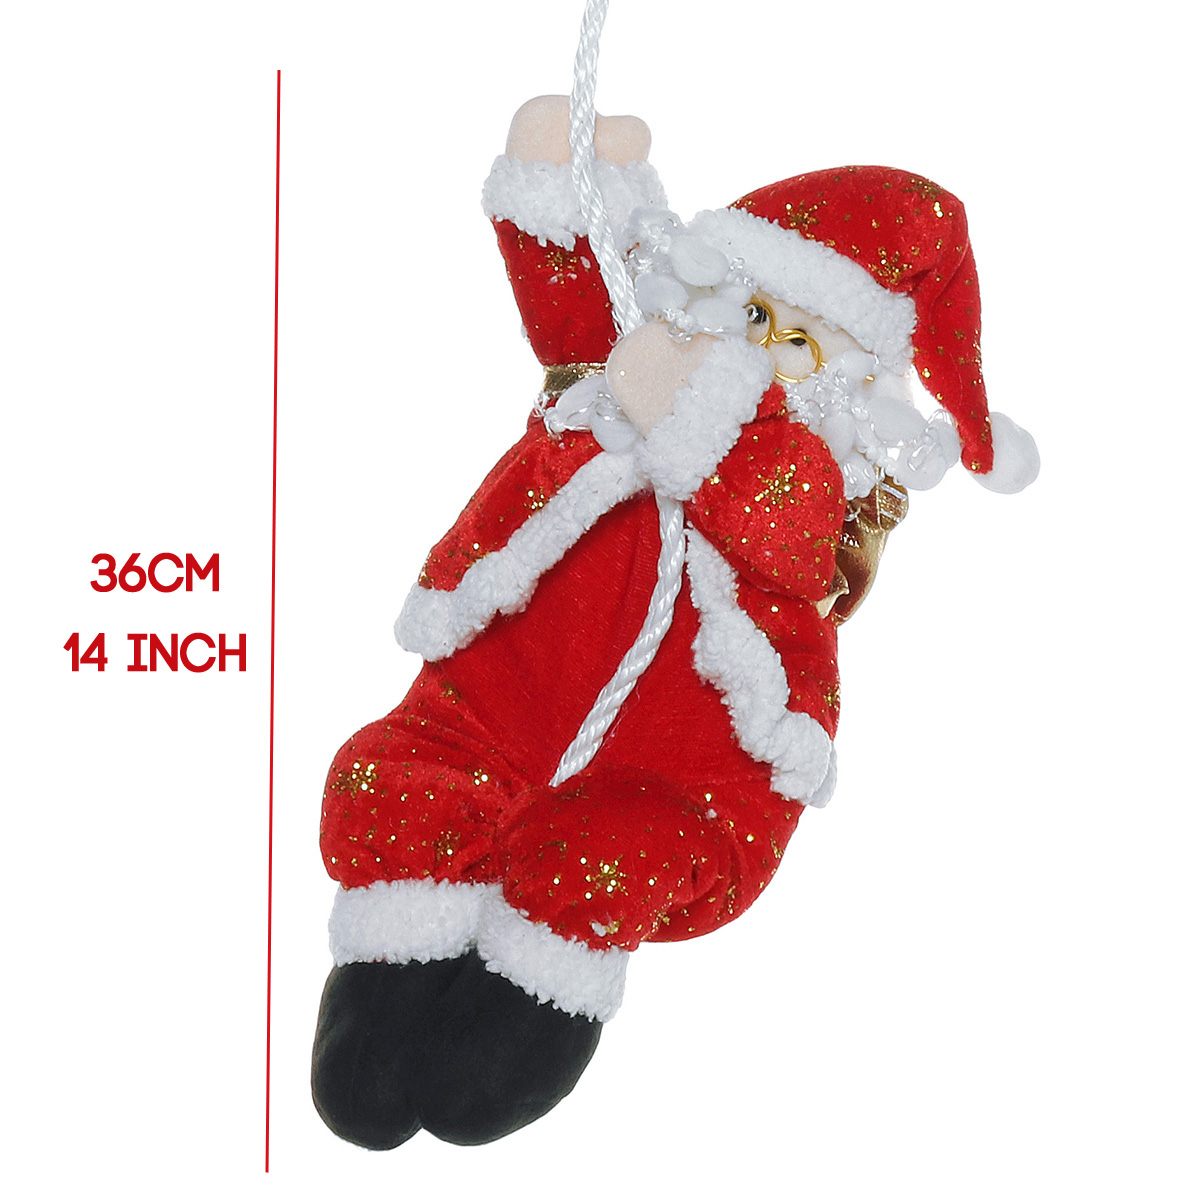 Santa-Climbing-On-Rope-Indoor-Outdoor-Christmas-Tree-Garden-Decorations-1590884-7